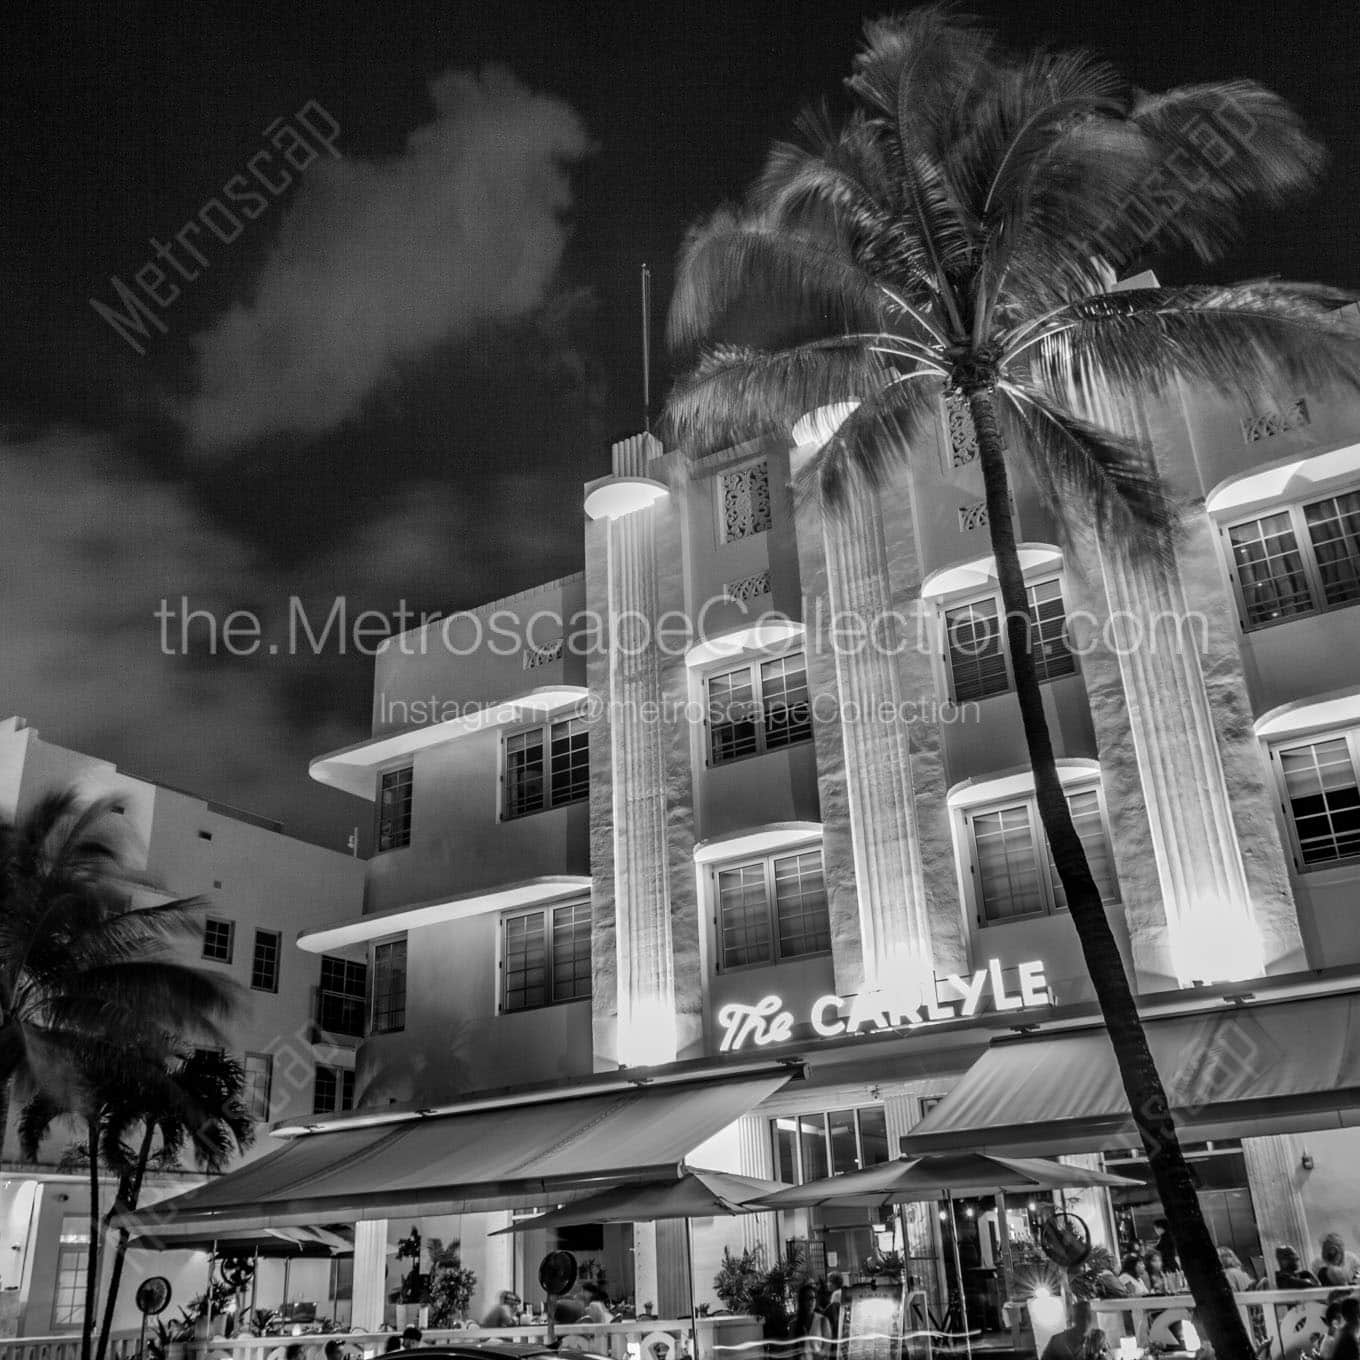 carlyle hotel south beach miami Black & White Wall Art